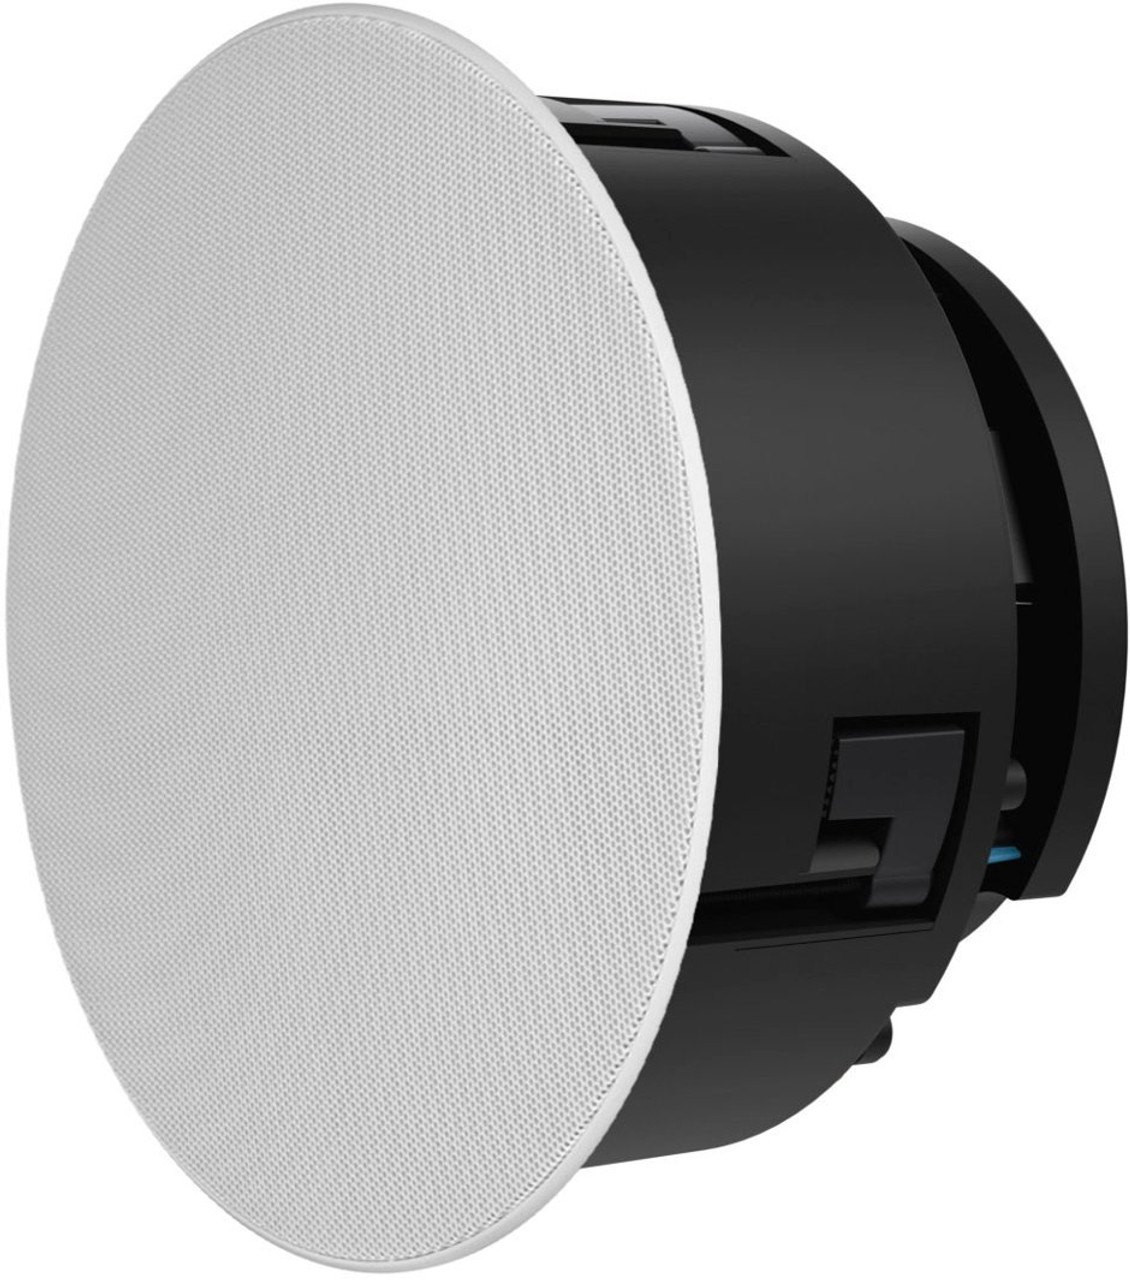 Sonance VX64R 6.5" Pivoting In-Ceiling Round Speakers (Pair)